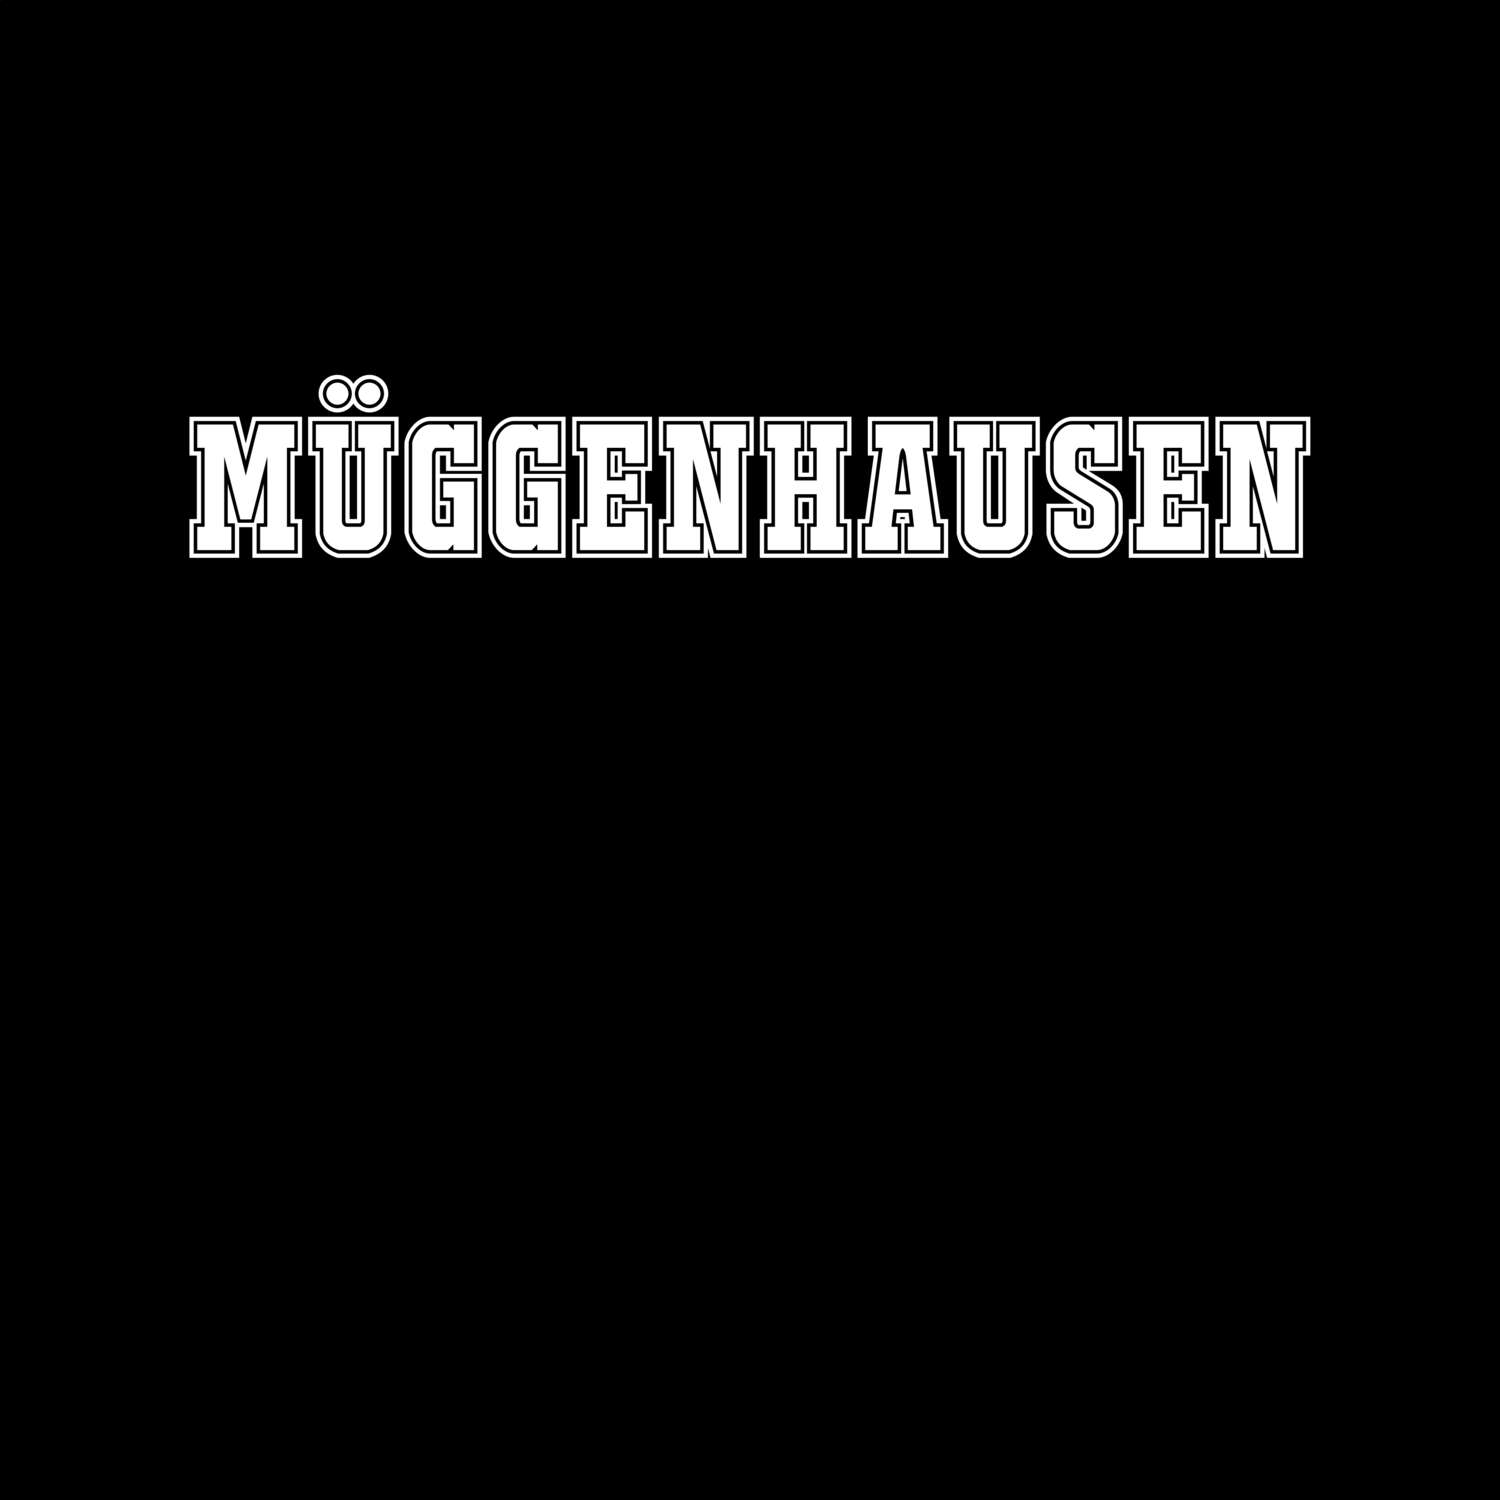 Müggenhausen T-Shirt »Classic«